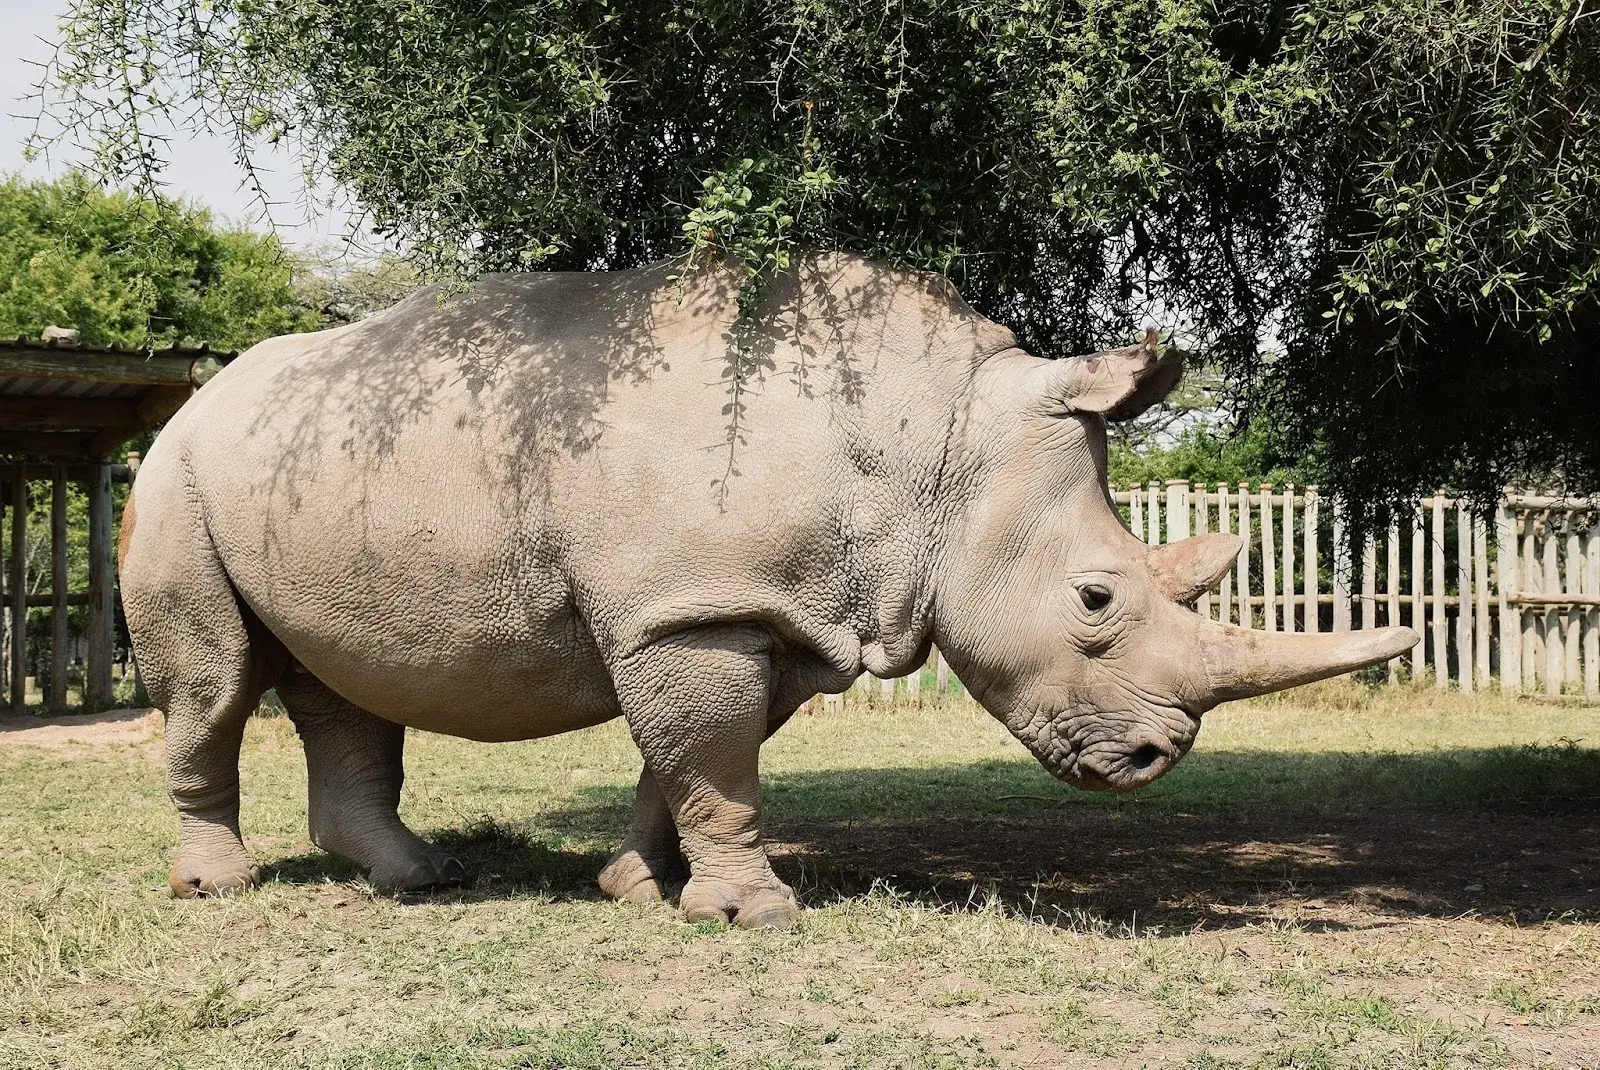 KenyaLuxurySafari.co.uk - Northern White Rhino